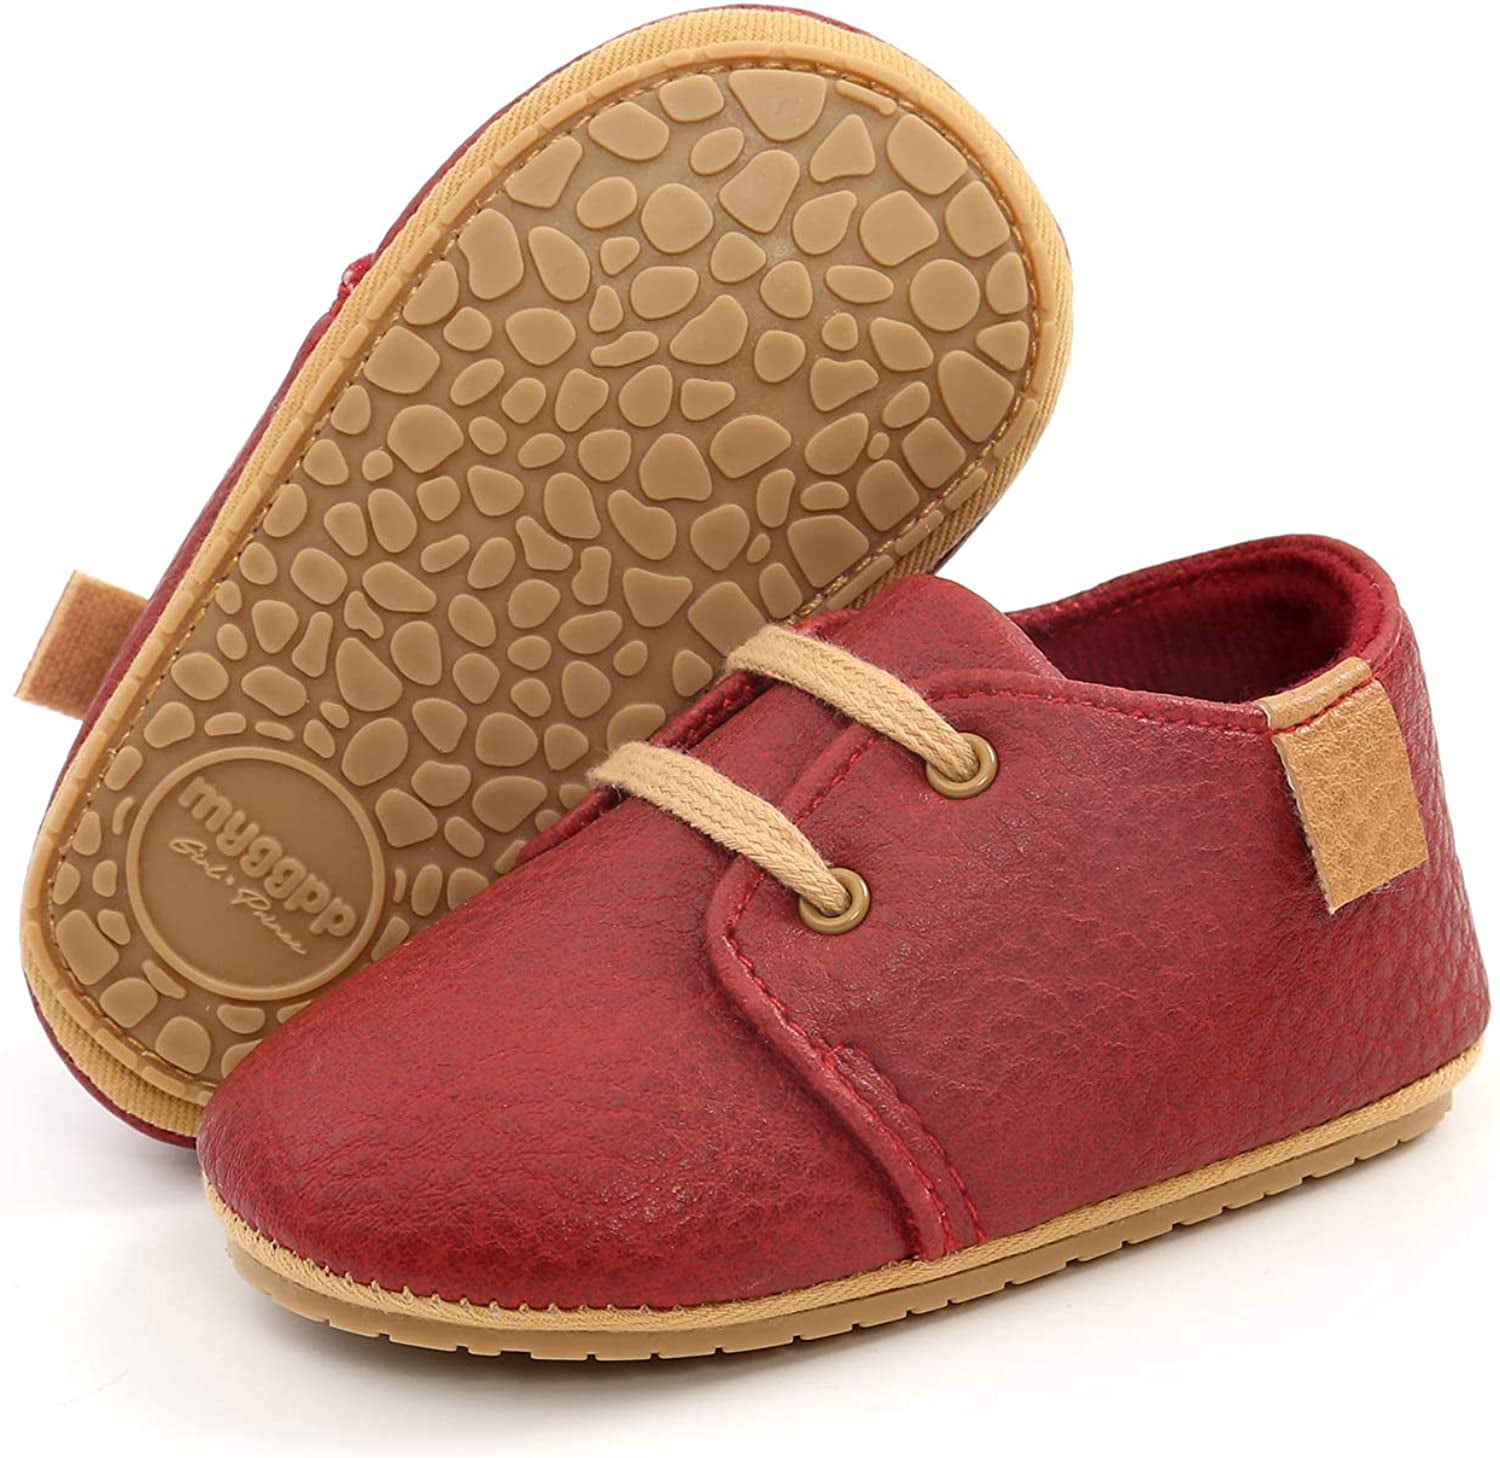 Infant Baby Boys Girls Moccasins Sneakers Premium Soft Sole Tassels Prewalker Anti-Slip Shoes First Walker Shoes 